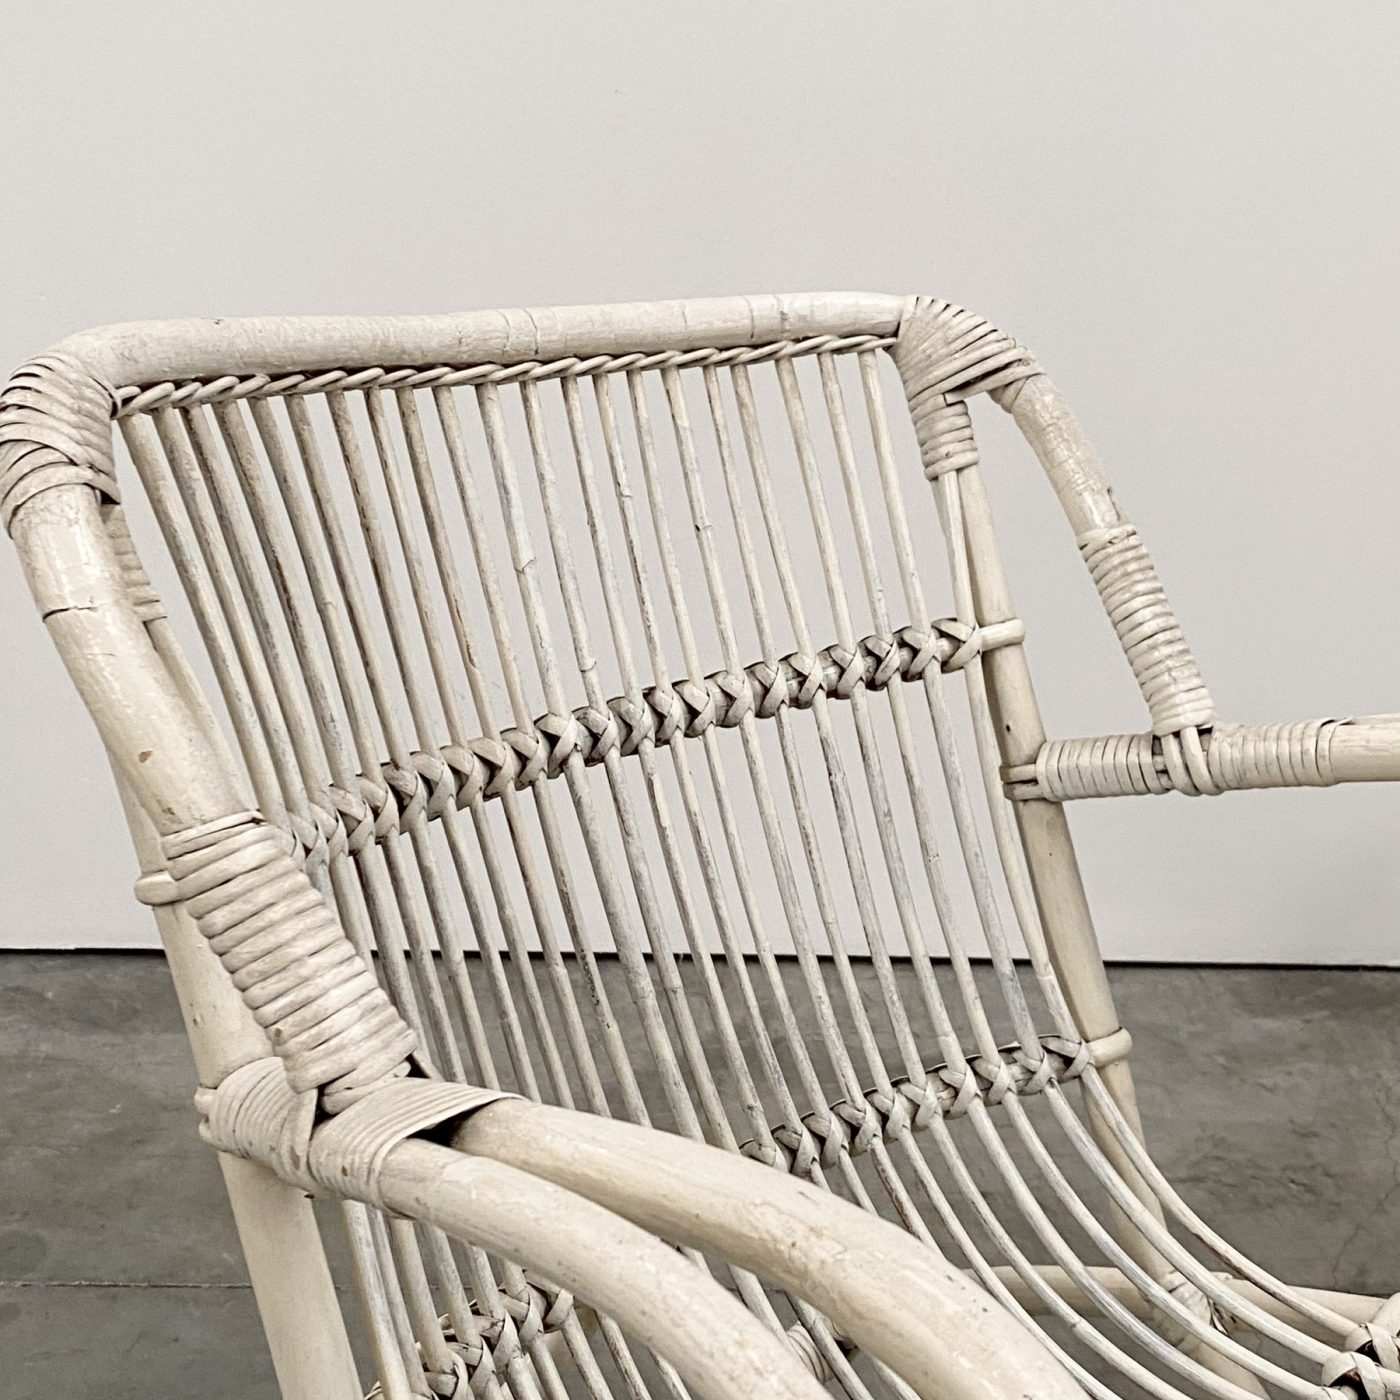 objet-vagabond-rattan-armchairs0006